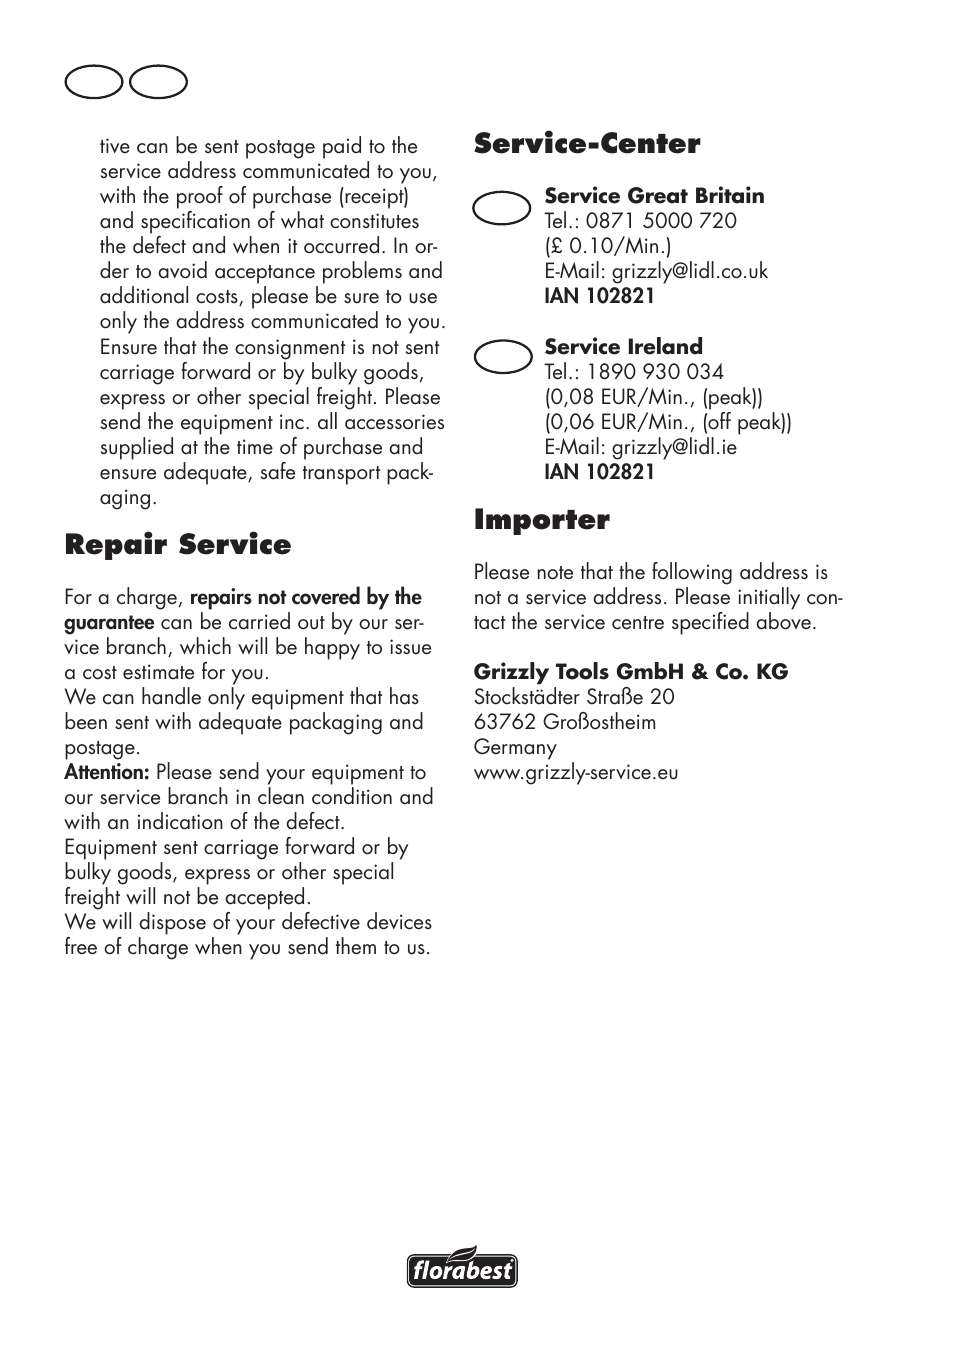 Repair service, Service-center, Importer | Florabest FLV 1200 A1 User  Manual | Page 18 / 72 | Original mode